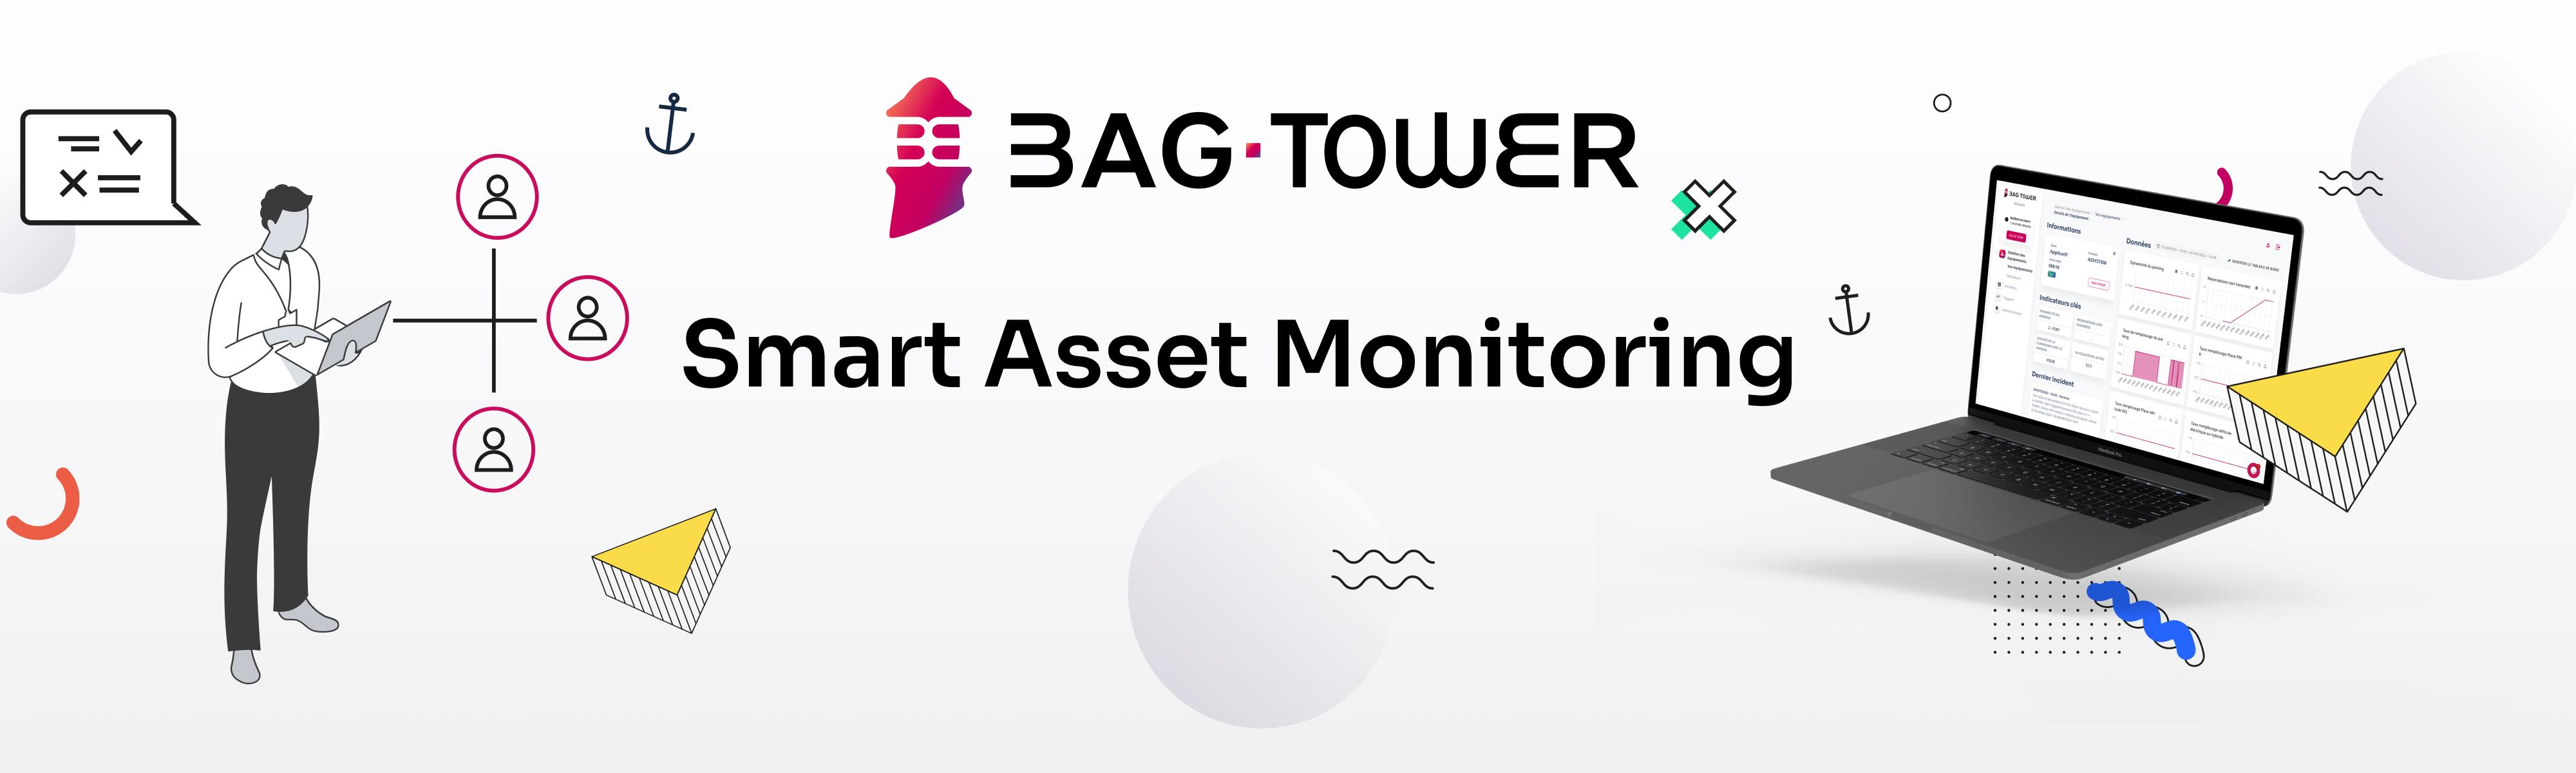 Review BAG•Tower: Smart Asset Monitoring - Appvizer